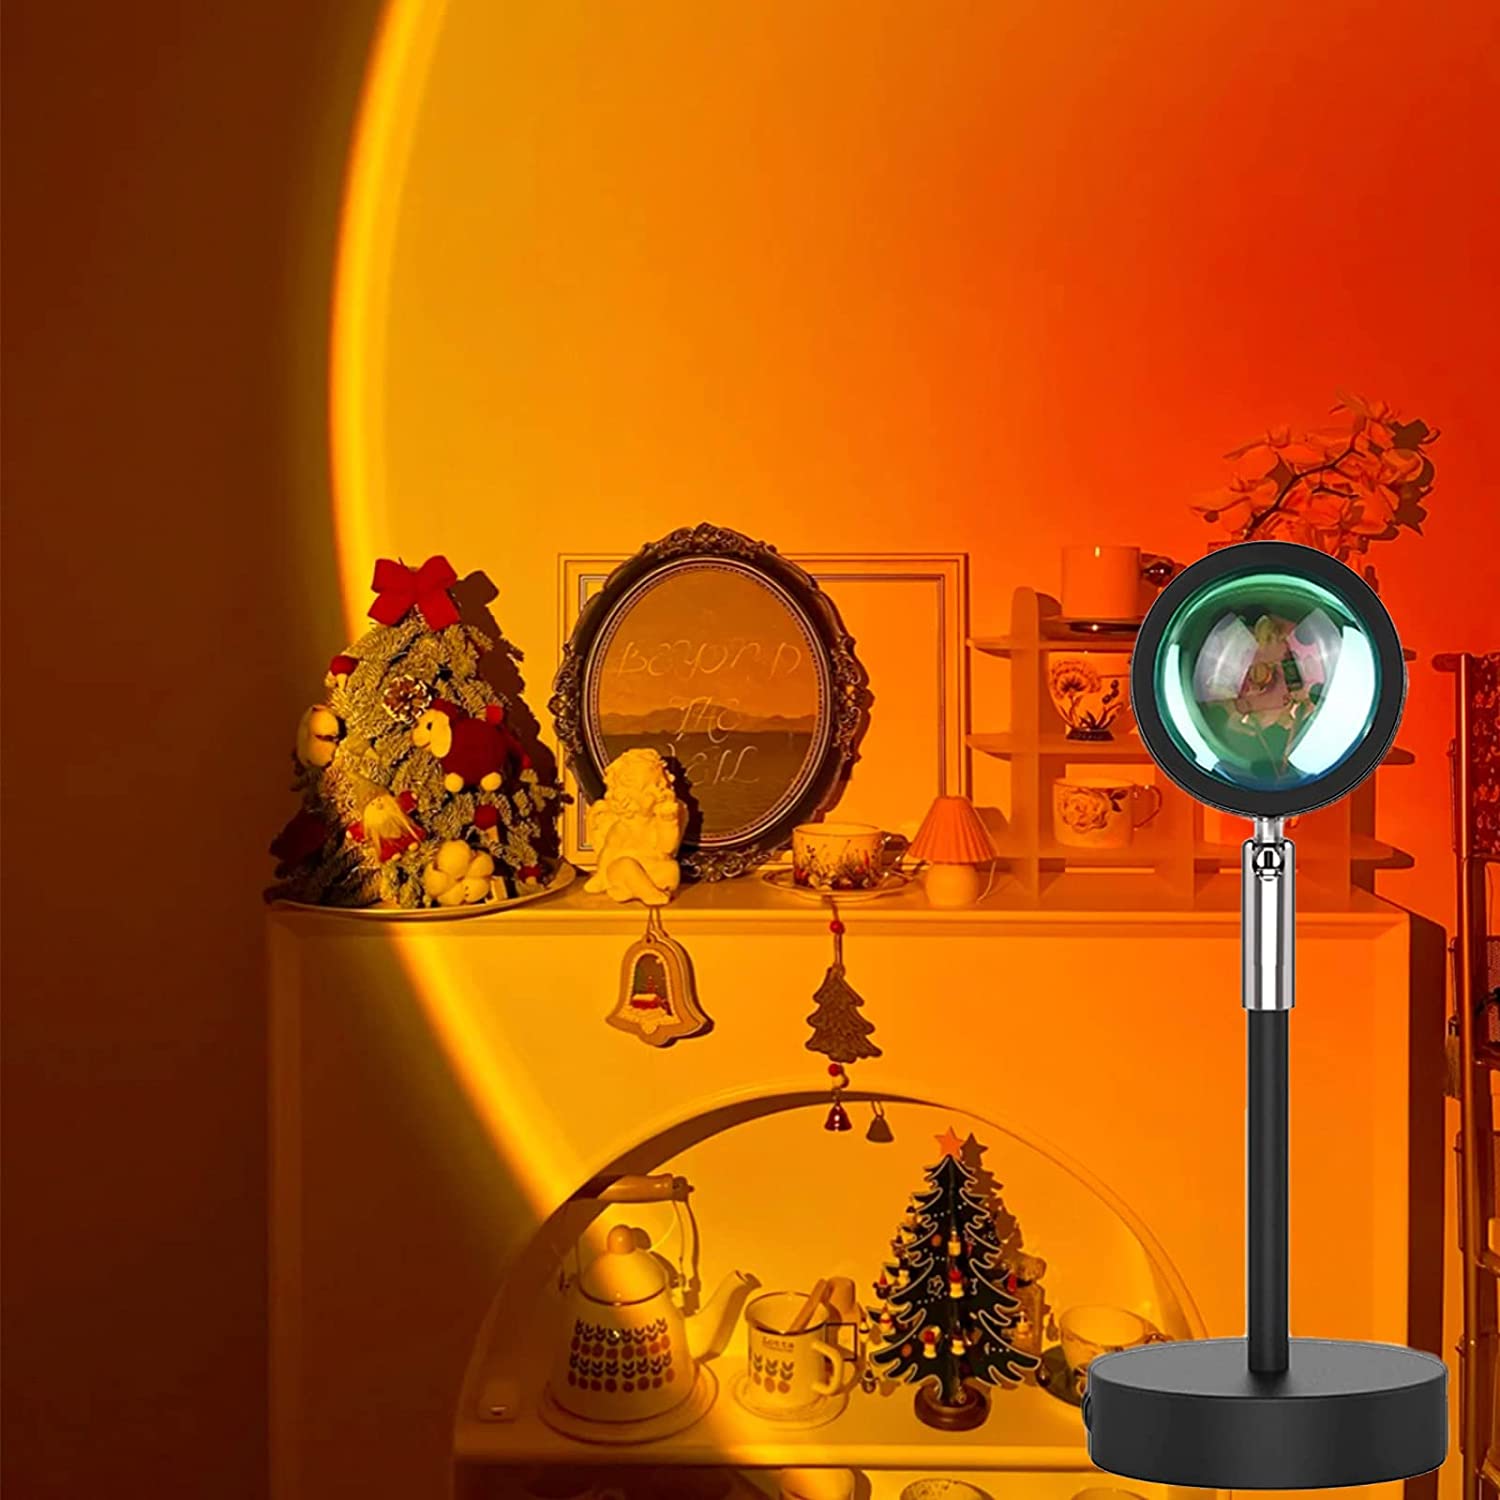 ''Sunset Projection LAMP,180 Degree Rotation Rainbow Projection LAMP USB Charging Lighting, Romantic 